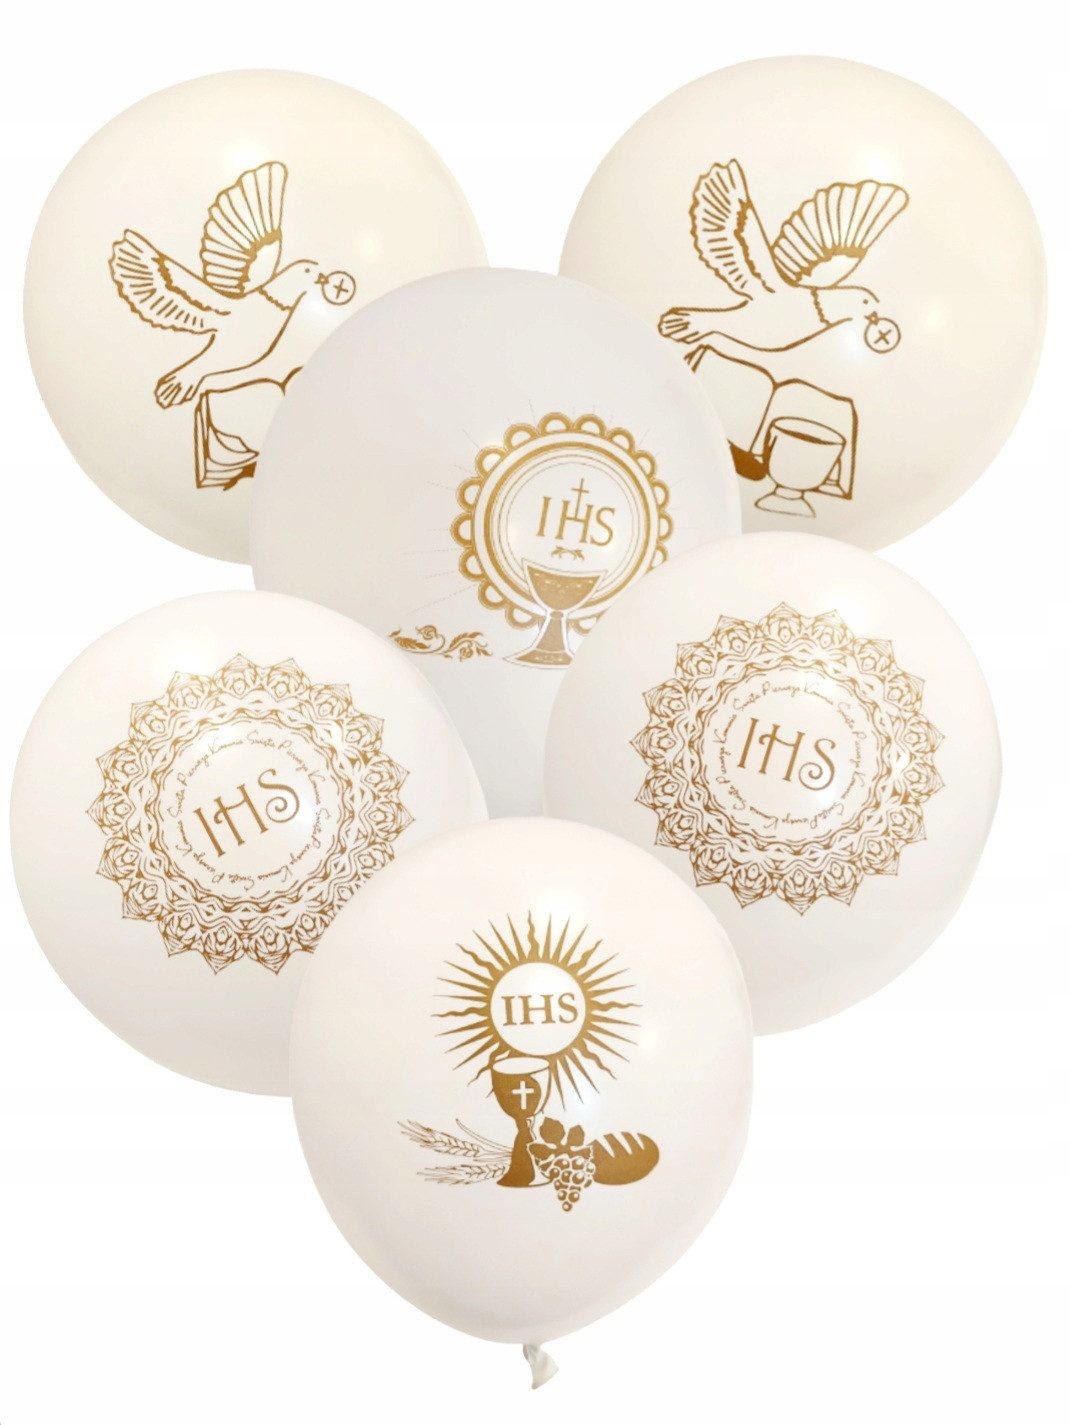 Festivalartikel Luftballon Kommunionsballons Set 6 Stück IHS Taube Kelch Dekoration 12 Zoll, BALONY KOMUNIJNE IHS